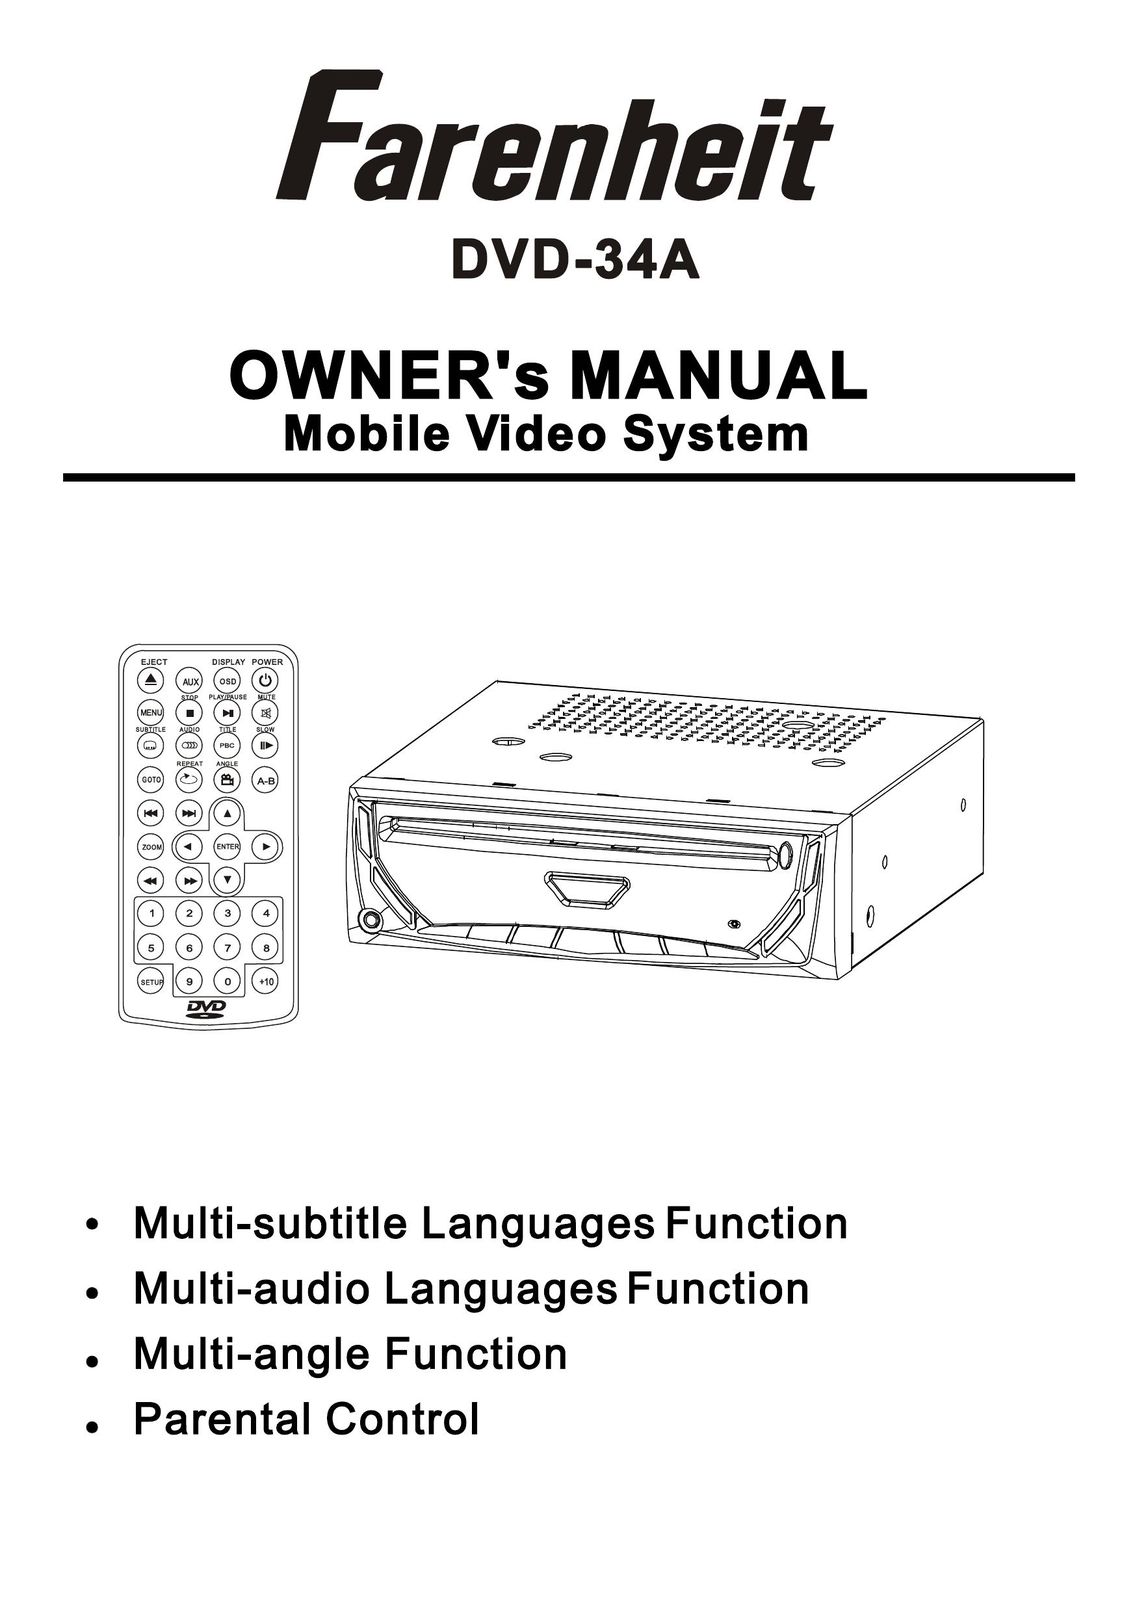 Farenheit Technologies DVD-34A Car Video System User Manual